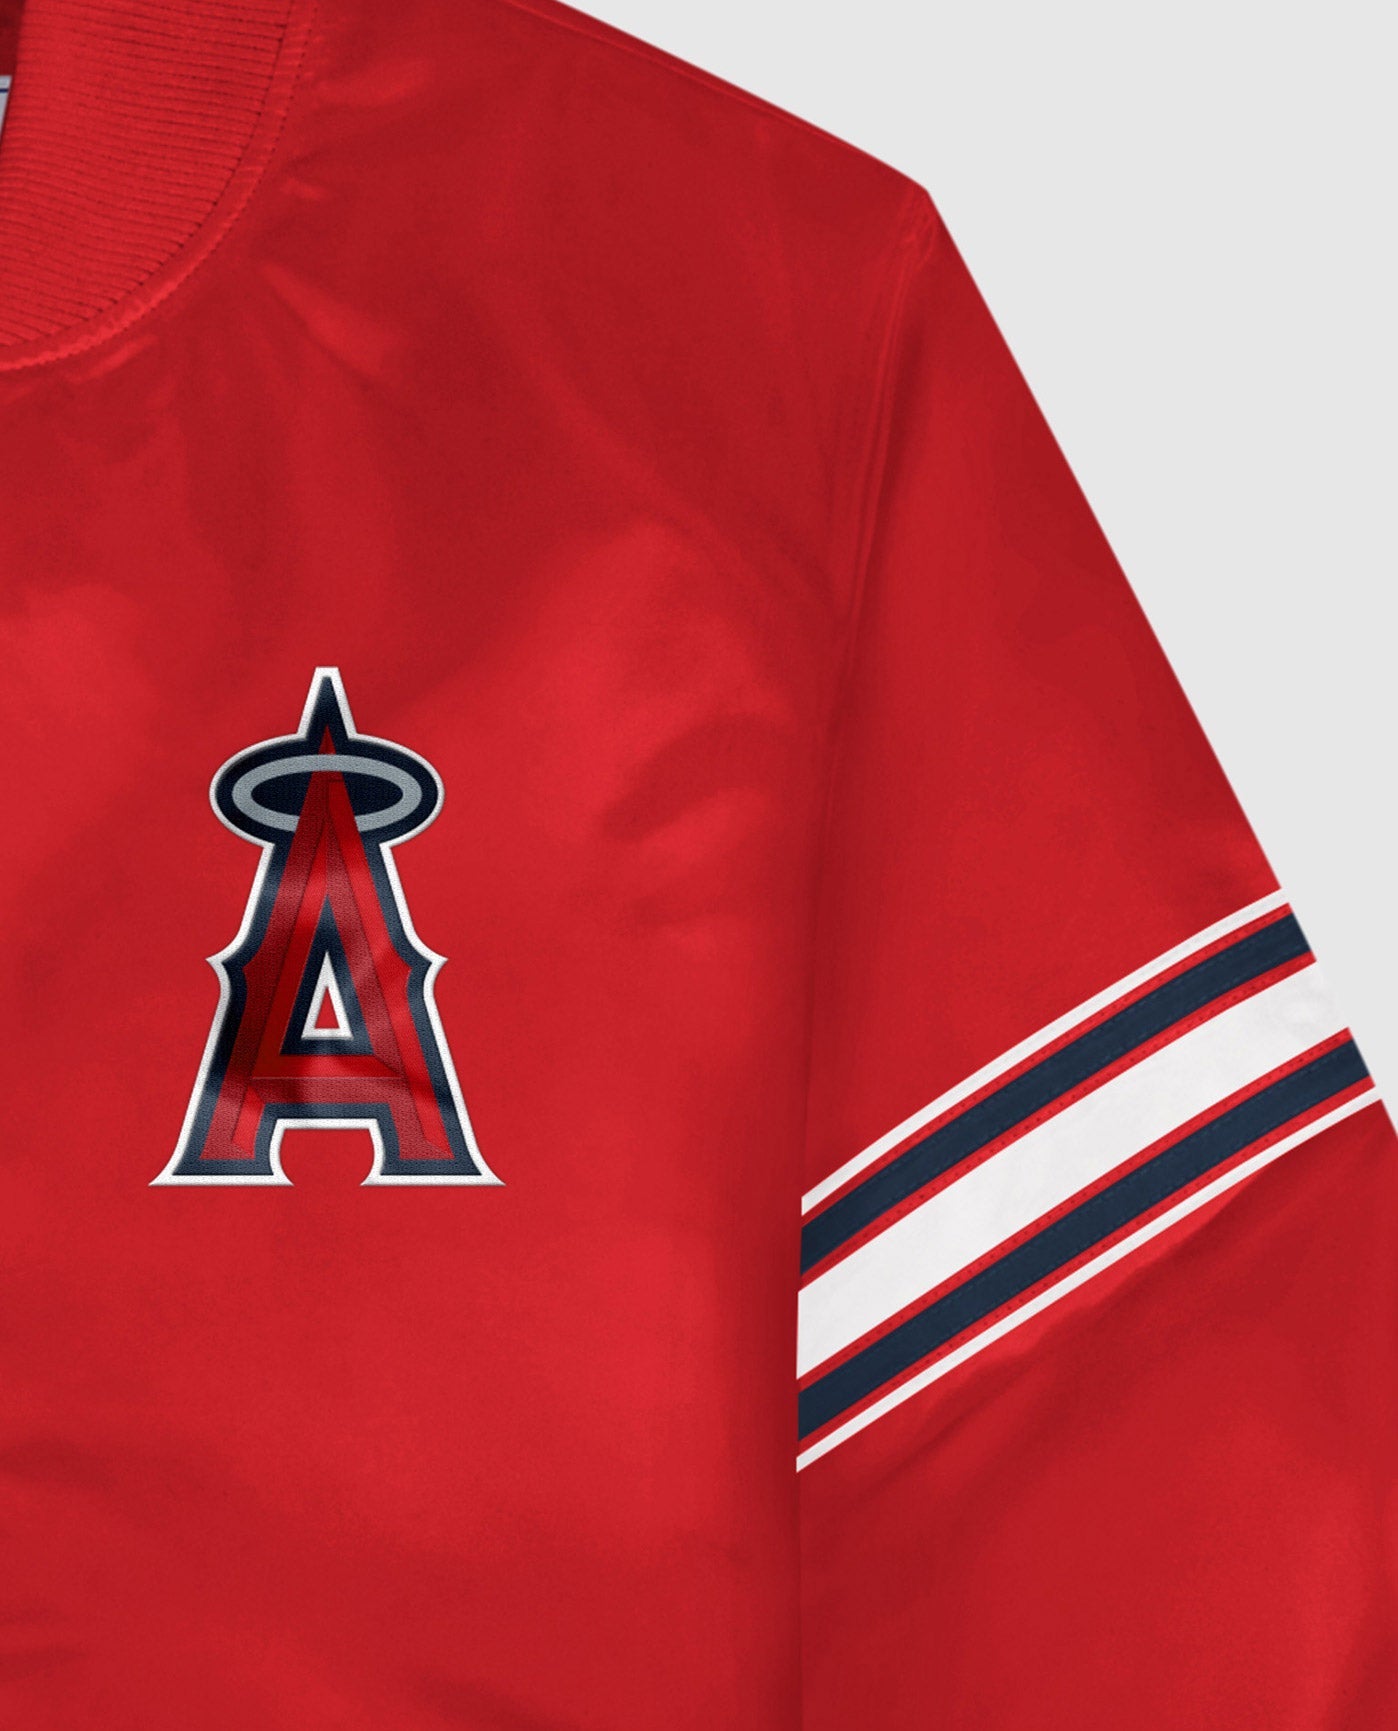 MLB LOS ANGELES ANGELS TEAM BIG LOGO MEN'S SATIN JACKET (RED) – Pro Standard